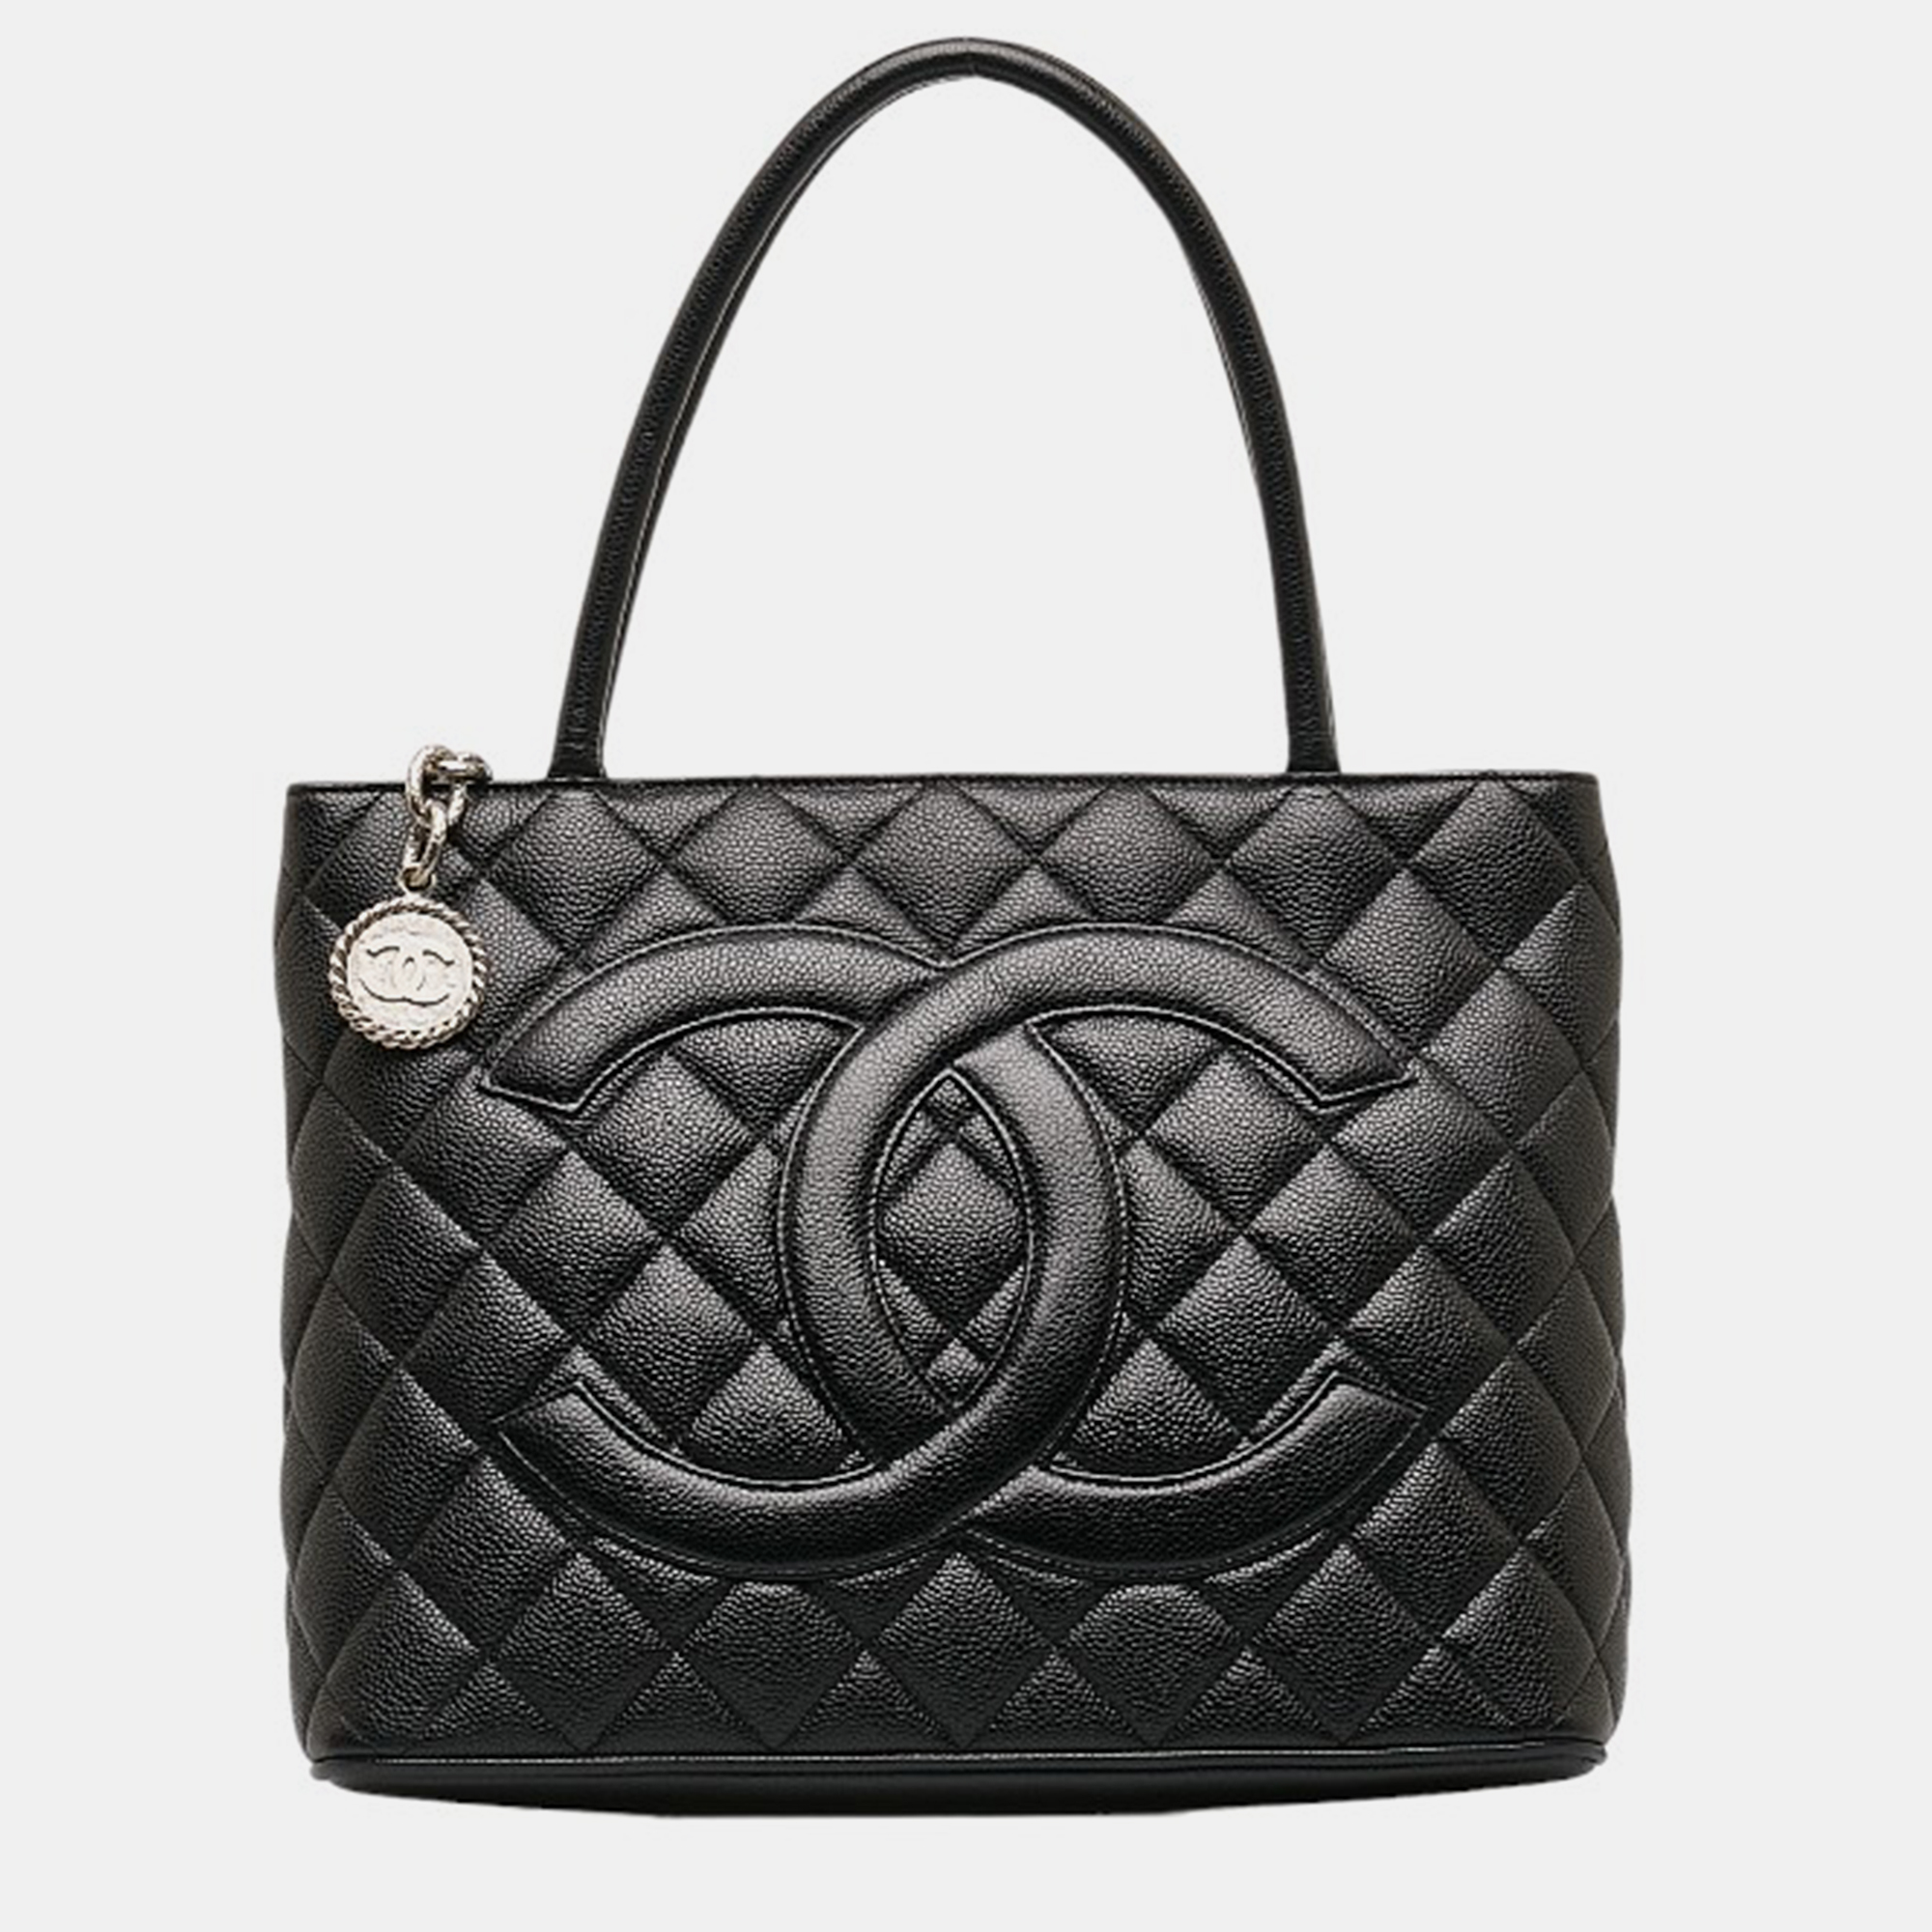 Chanel black caviar leather medallion tote bag